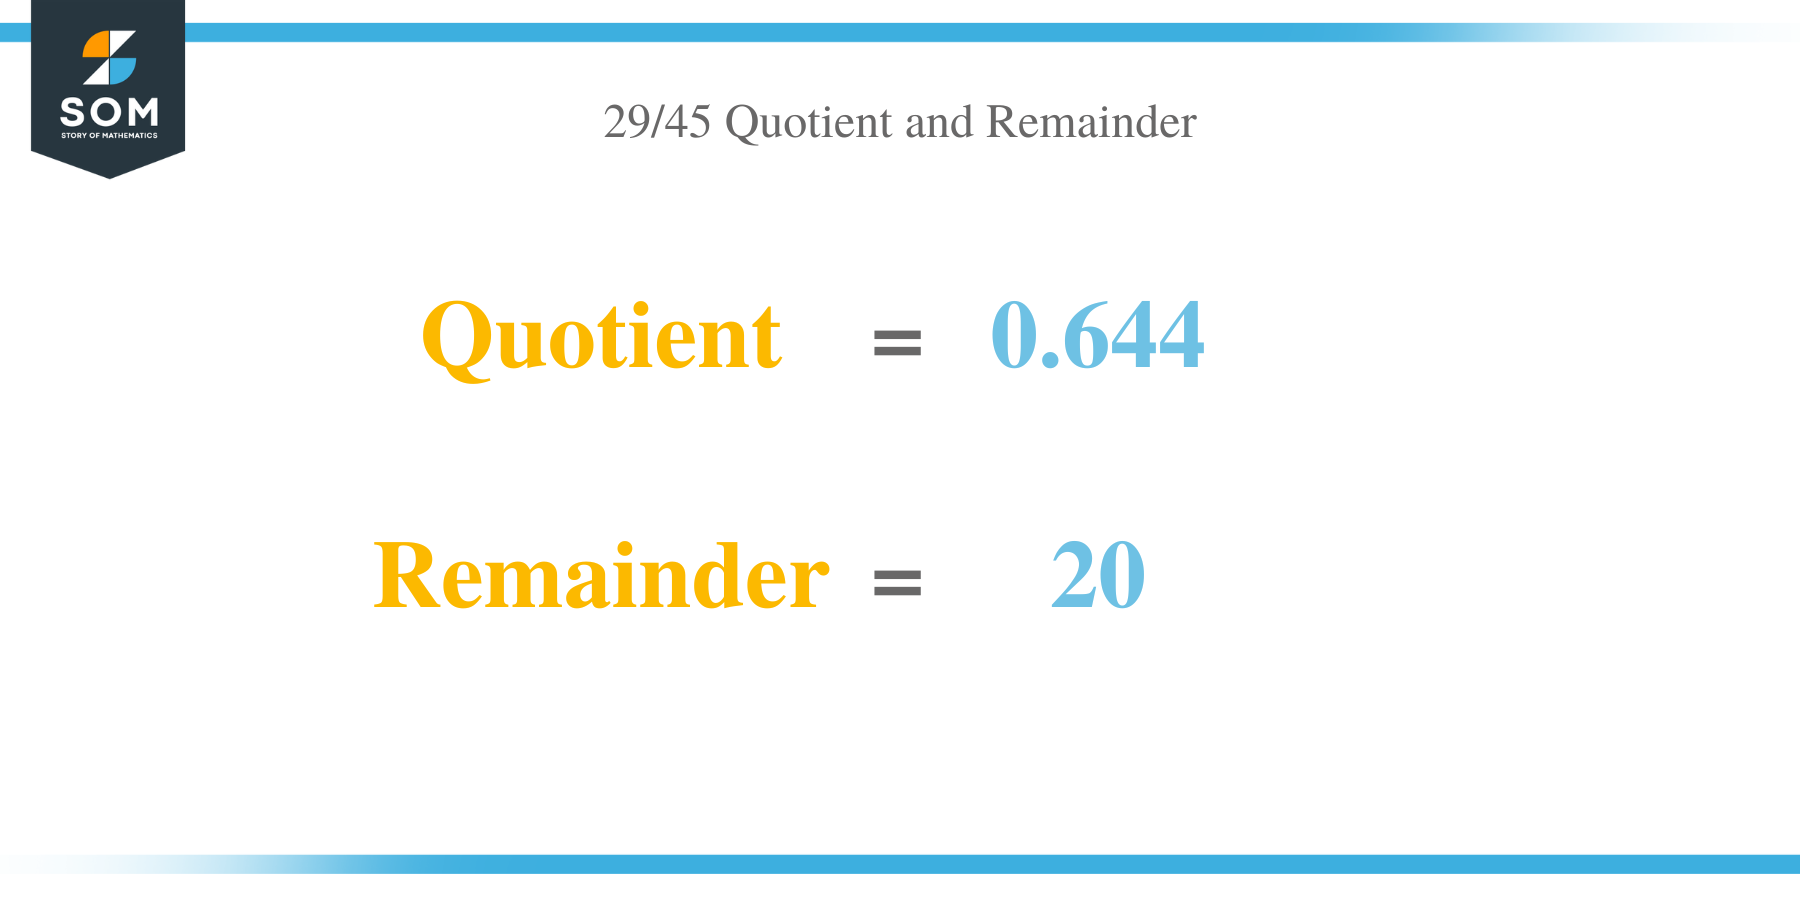 Quotient and Remainder of 29 per 45